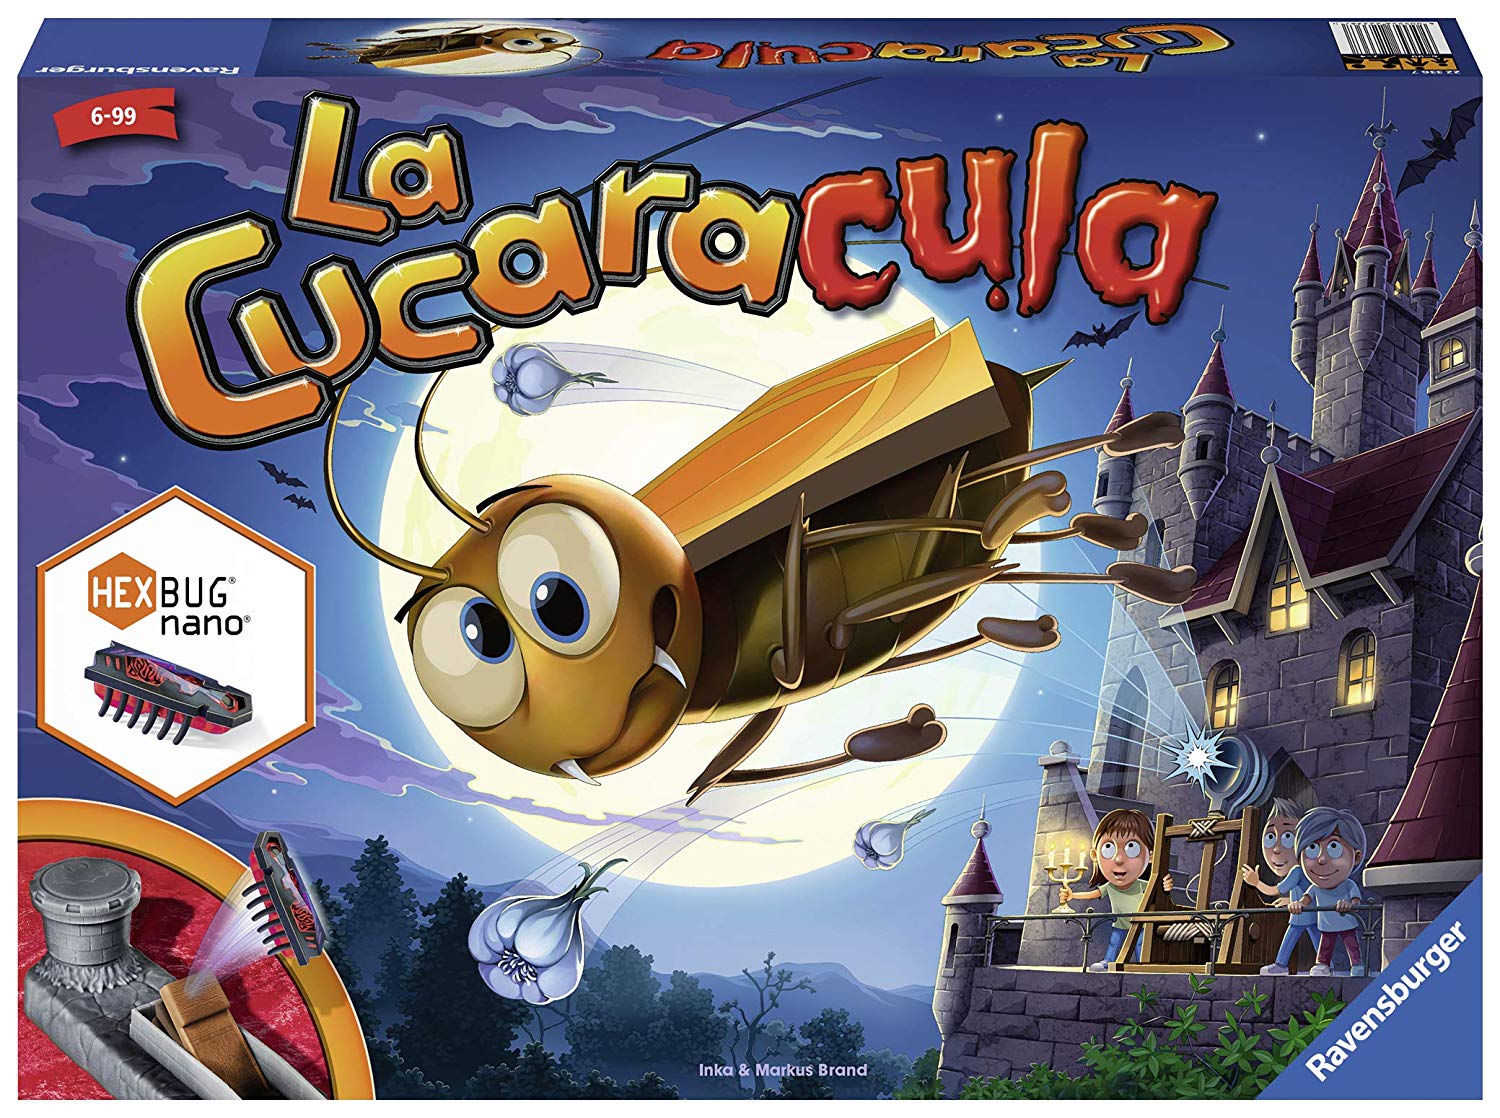 Ravensburger La Cucaracula 22336 Board Game